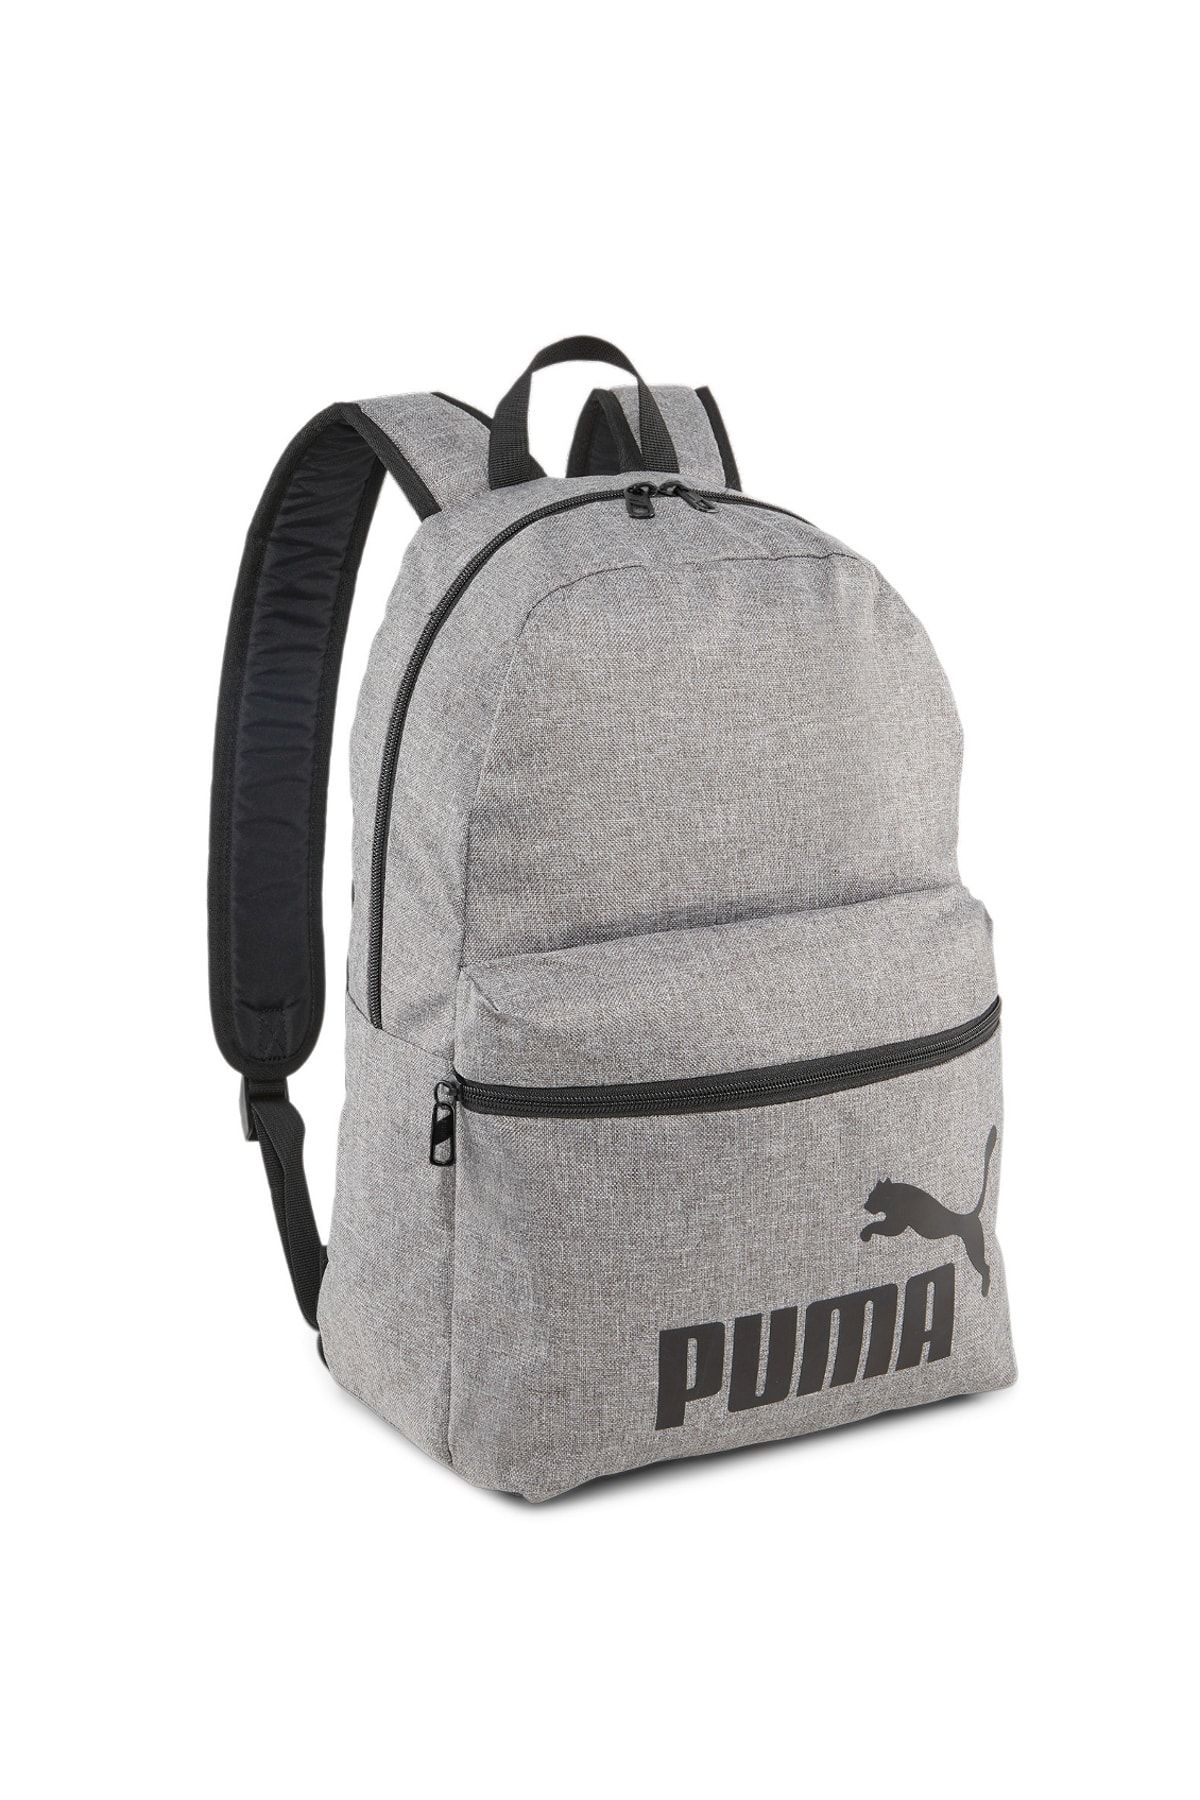 Puma Phase Backpack III Medium Gray Heat